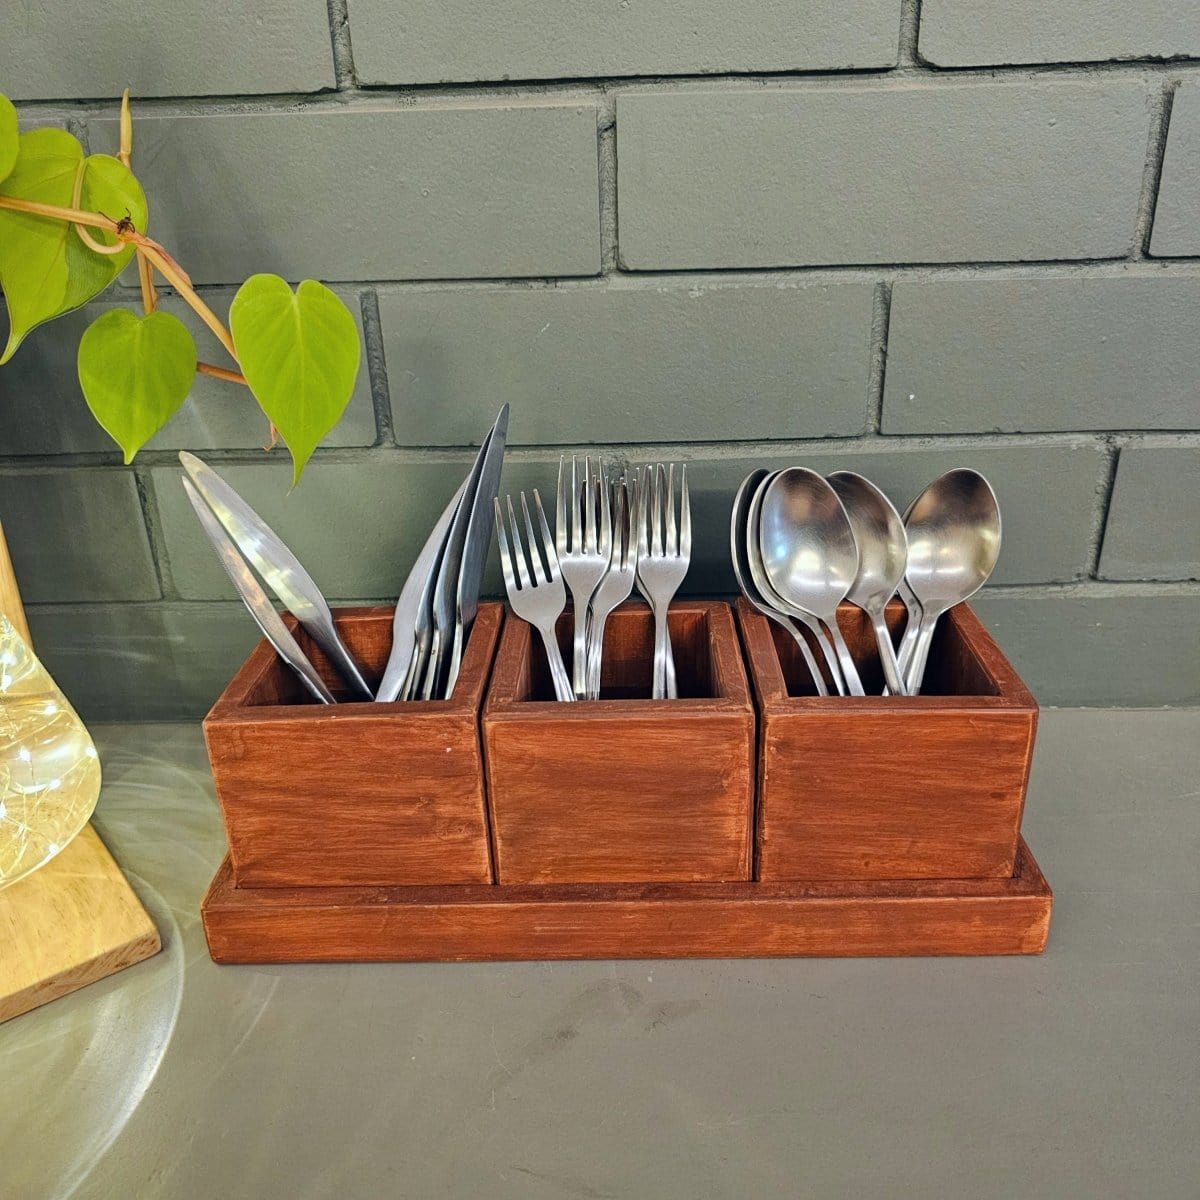 Barish Cutlery Holder Basic Best Home Decor Handcrafted